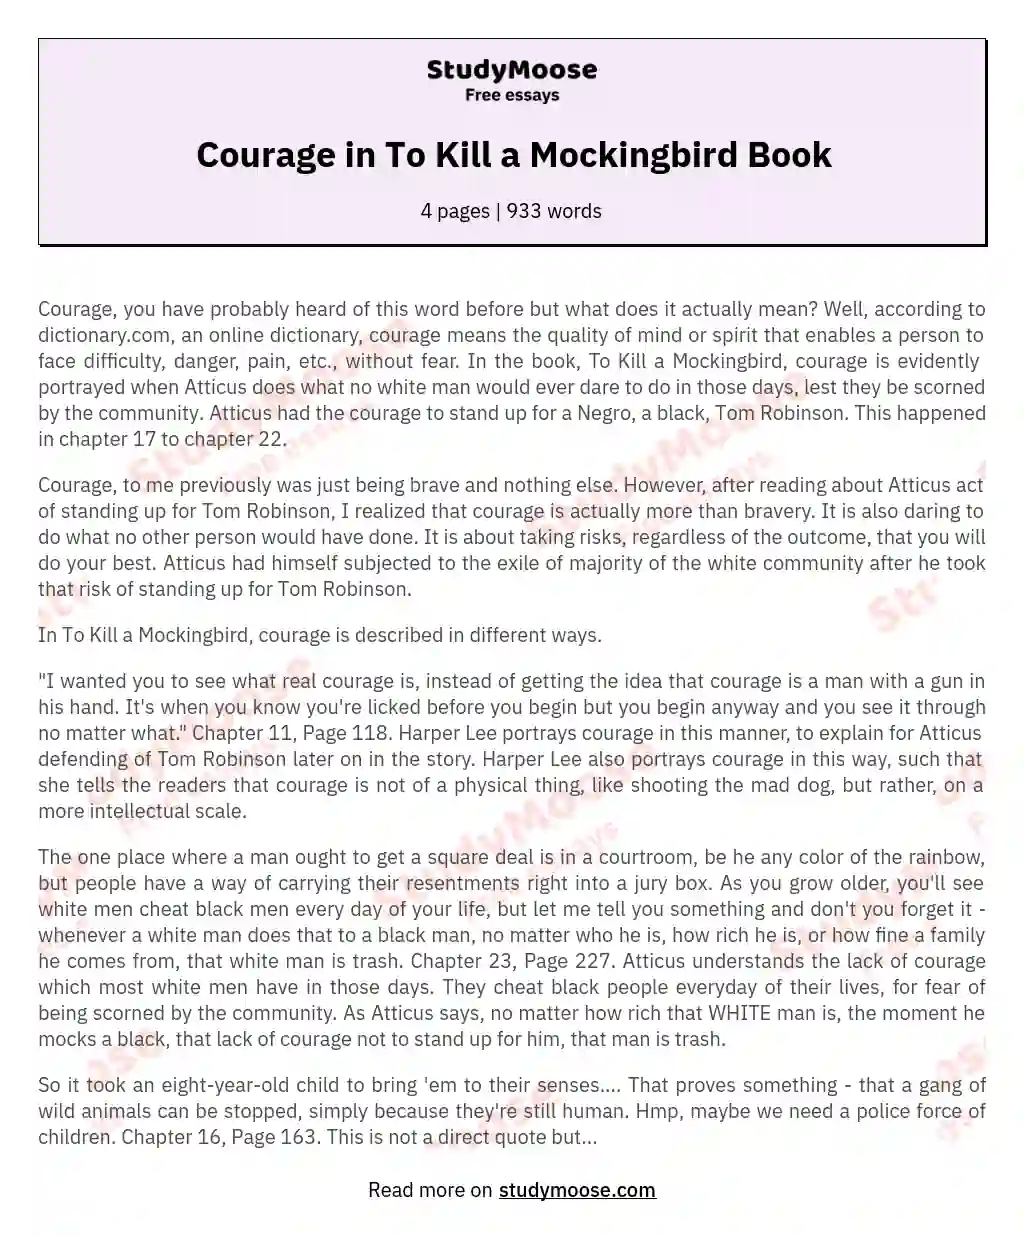 Courage in To Kill a Mockingbird Book